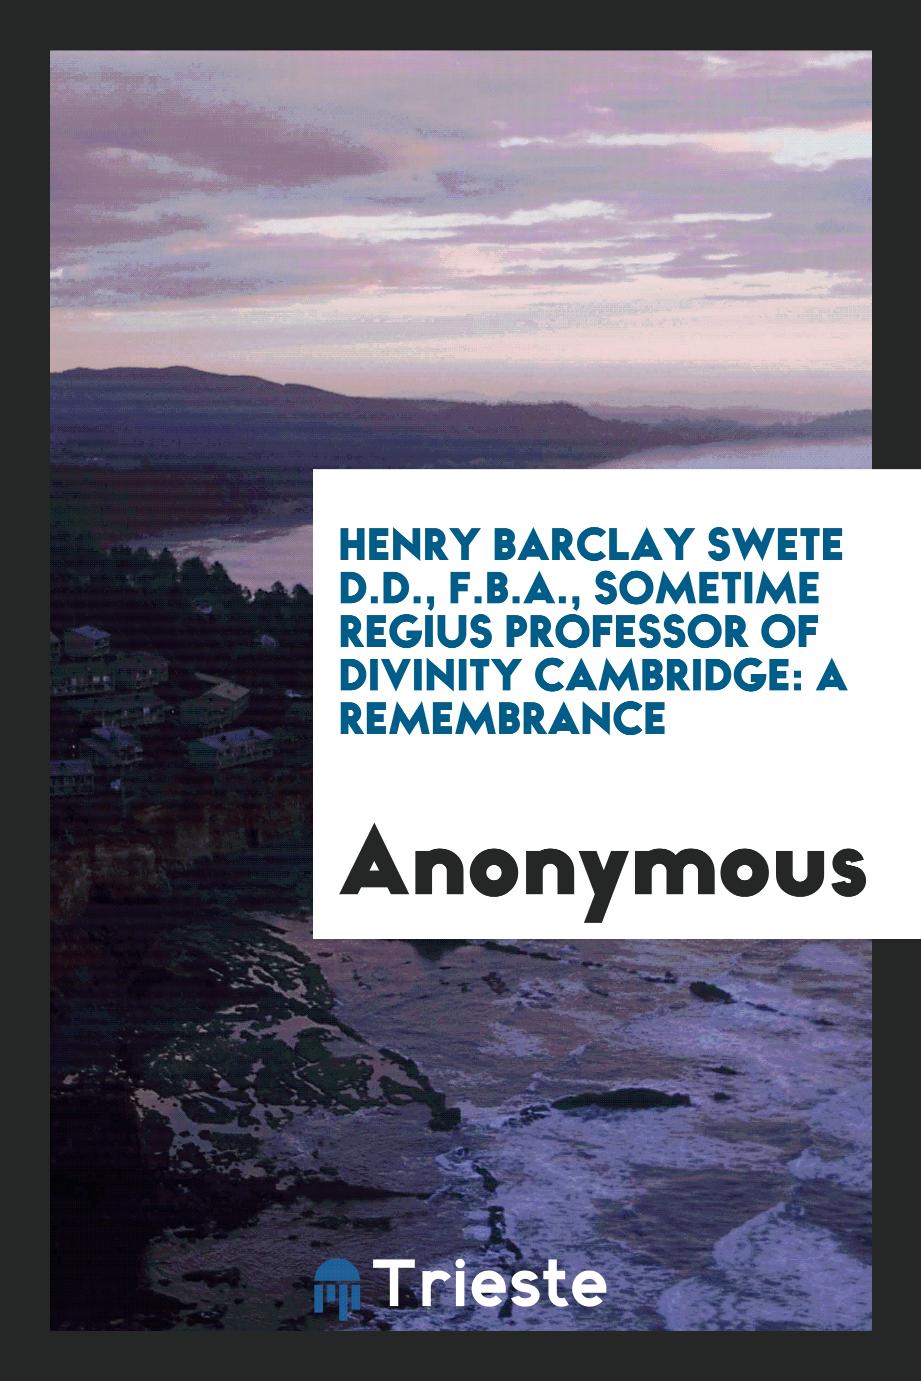 Henry Barclay Swete D.D., F.B.A., sometime Regius Professor of Divinity Cambridge: a remembrance